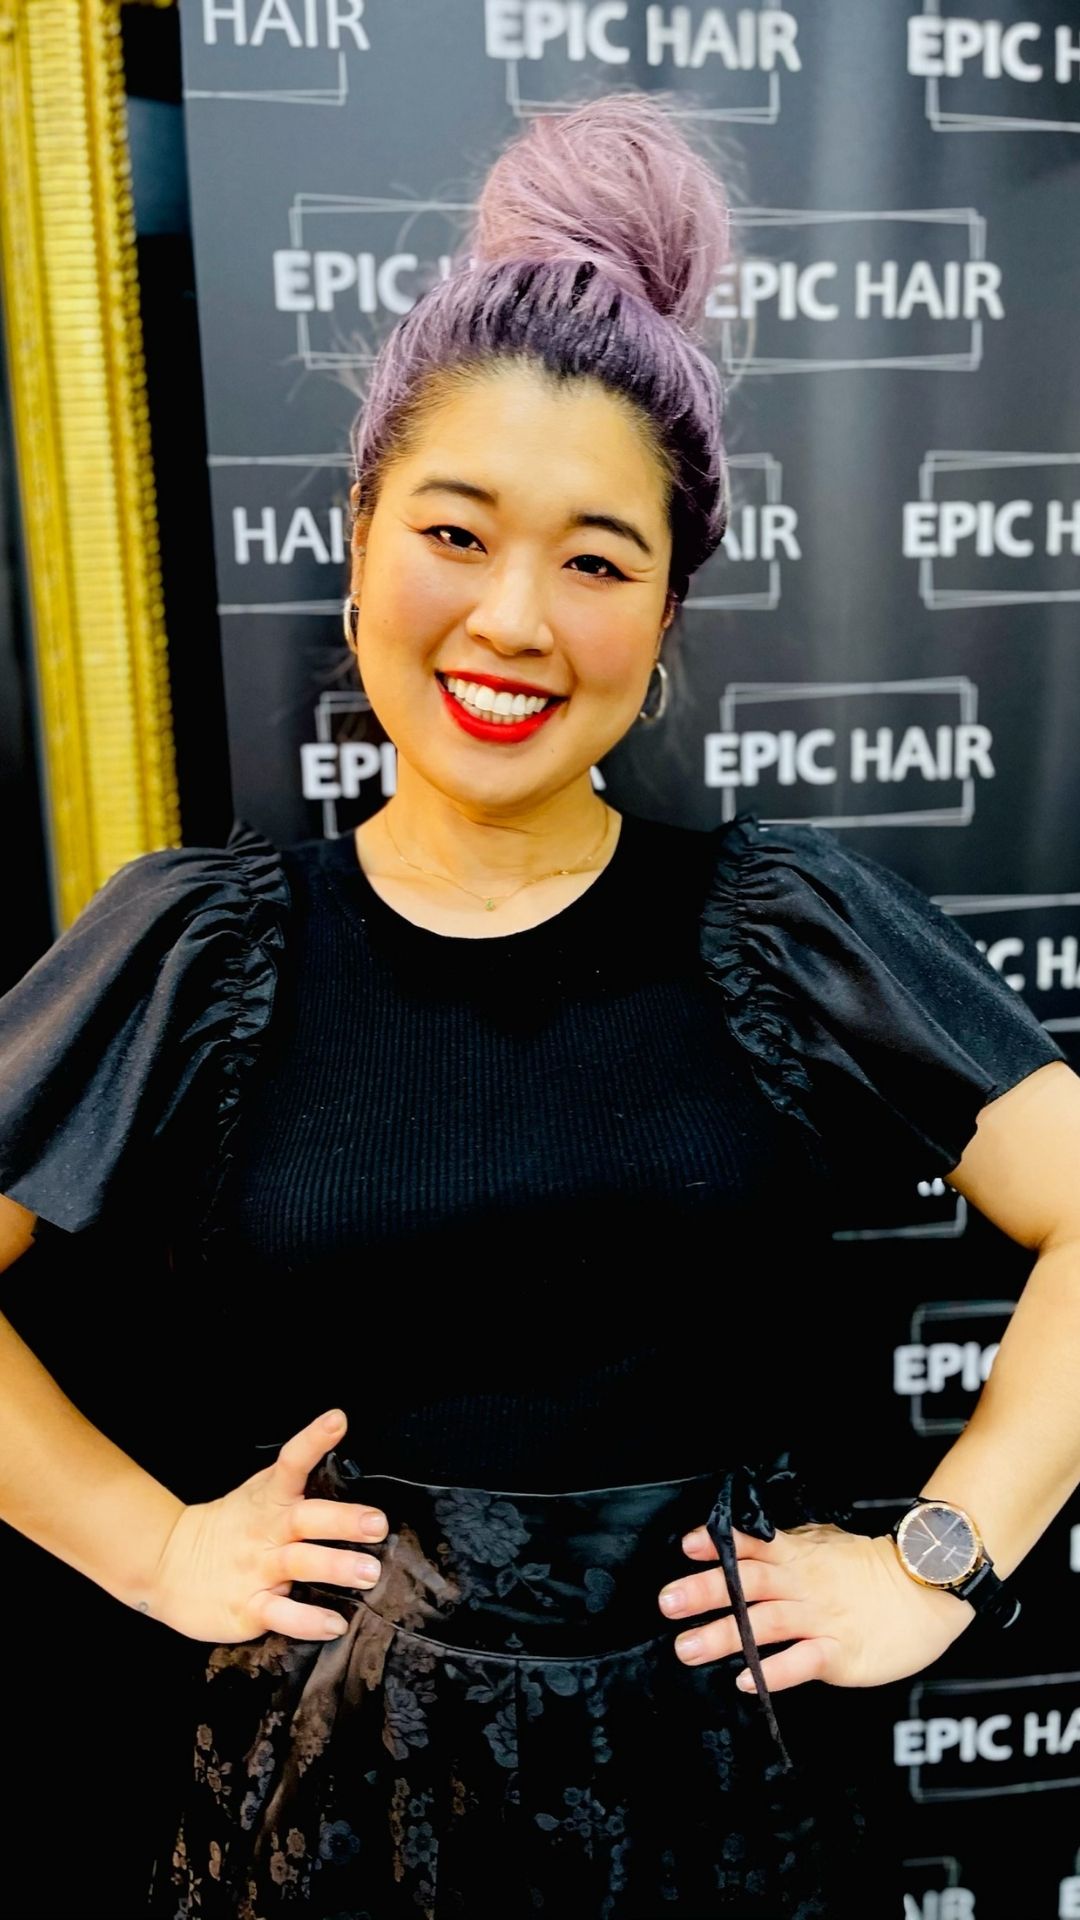 EPIC HAIR | Hair & Beauty Salon at Westfield Woden